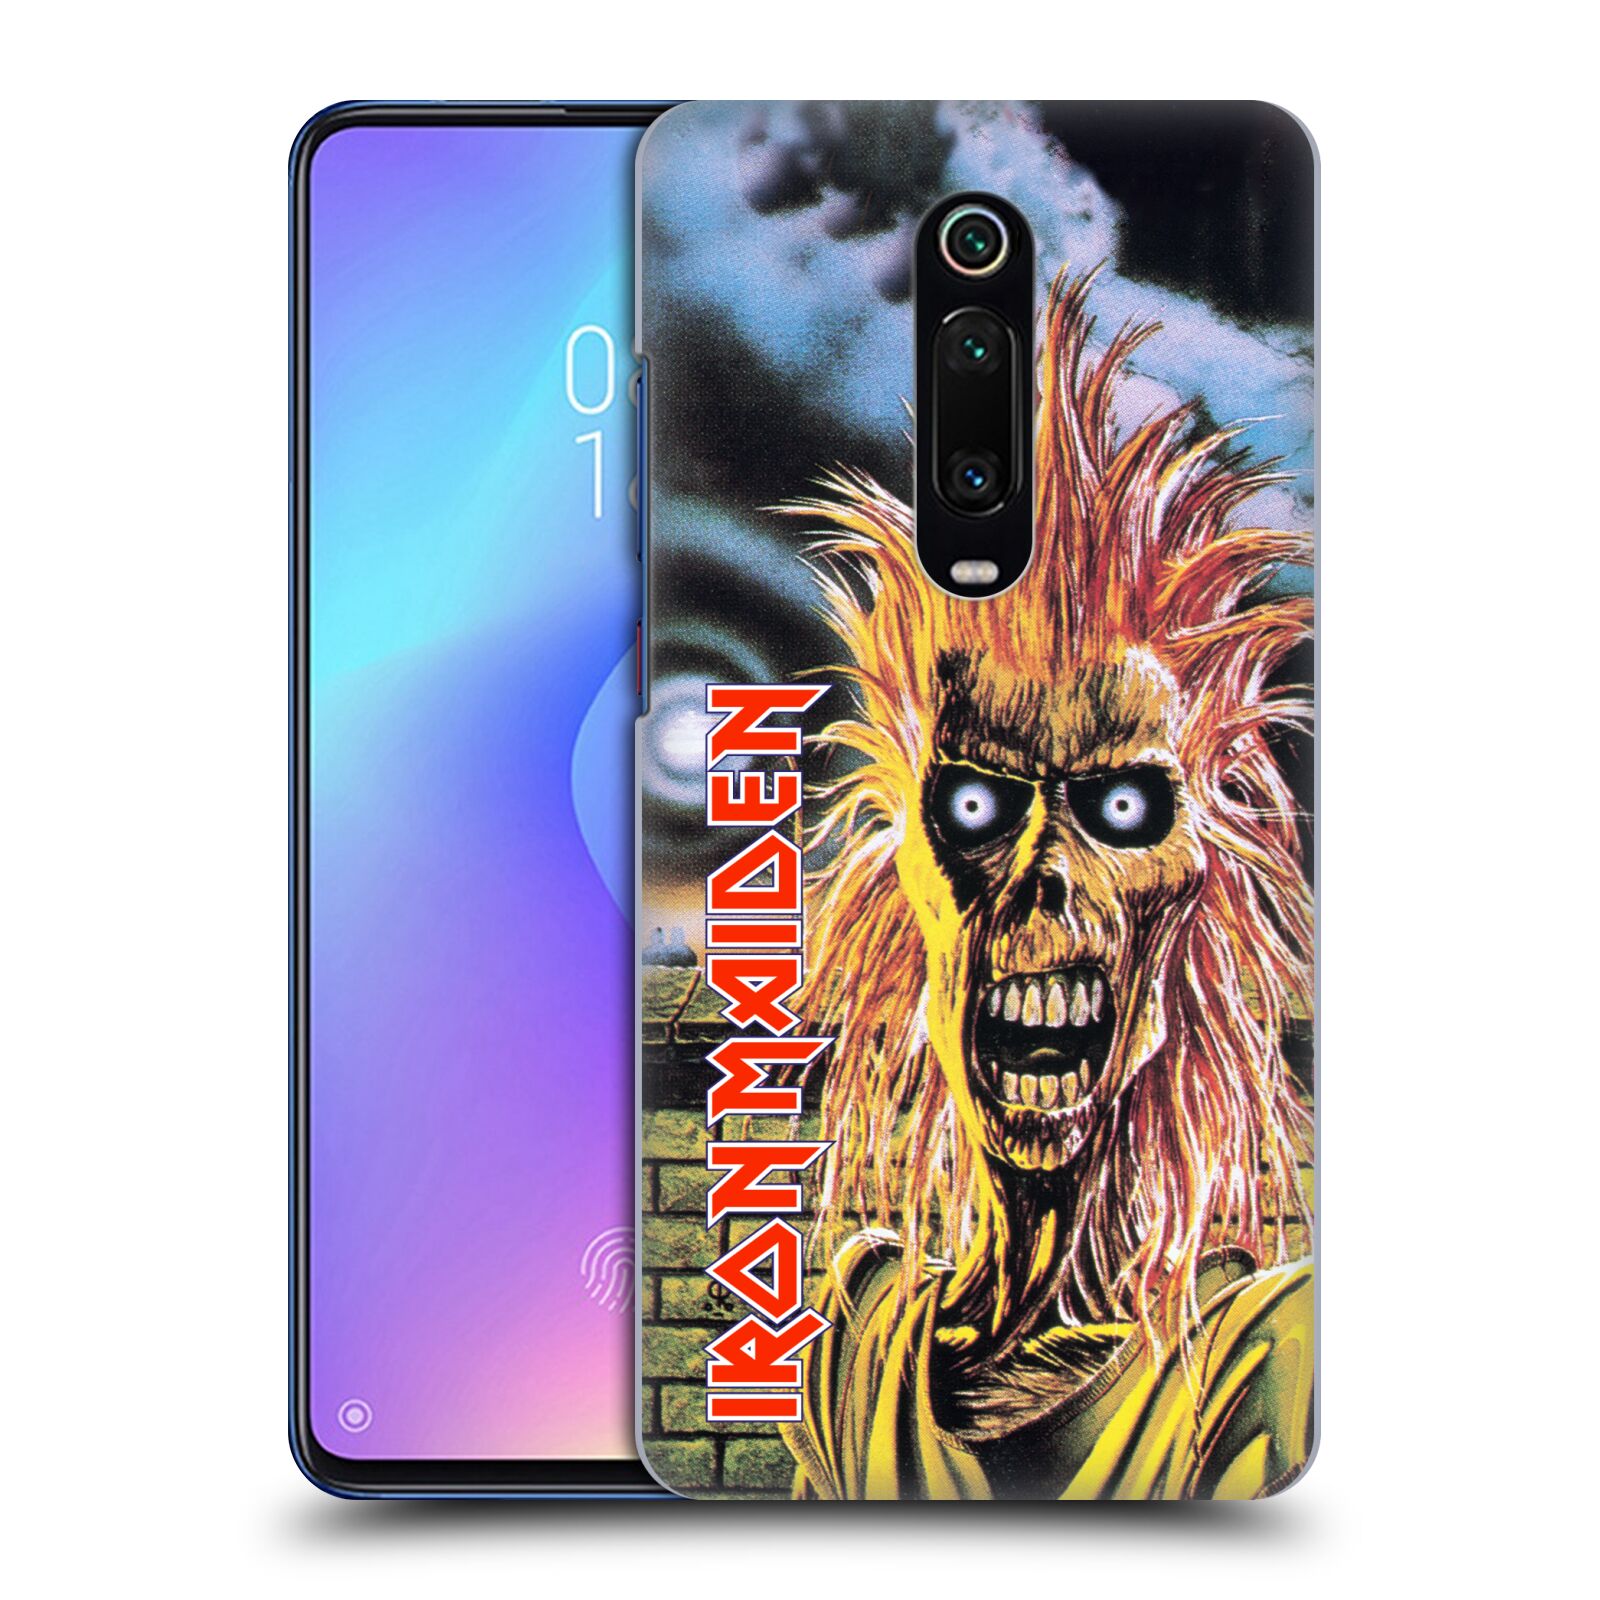 Pouzdro na mobil Xiaomi Mi 9T PRO - HEAD CASE - Heavymetalová skupina Iron Maiden punker